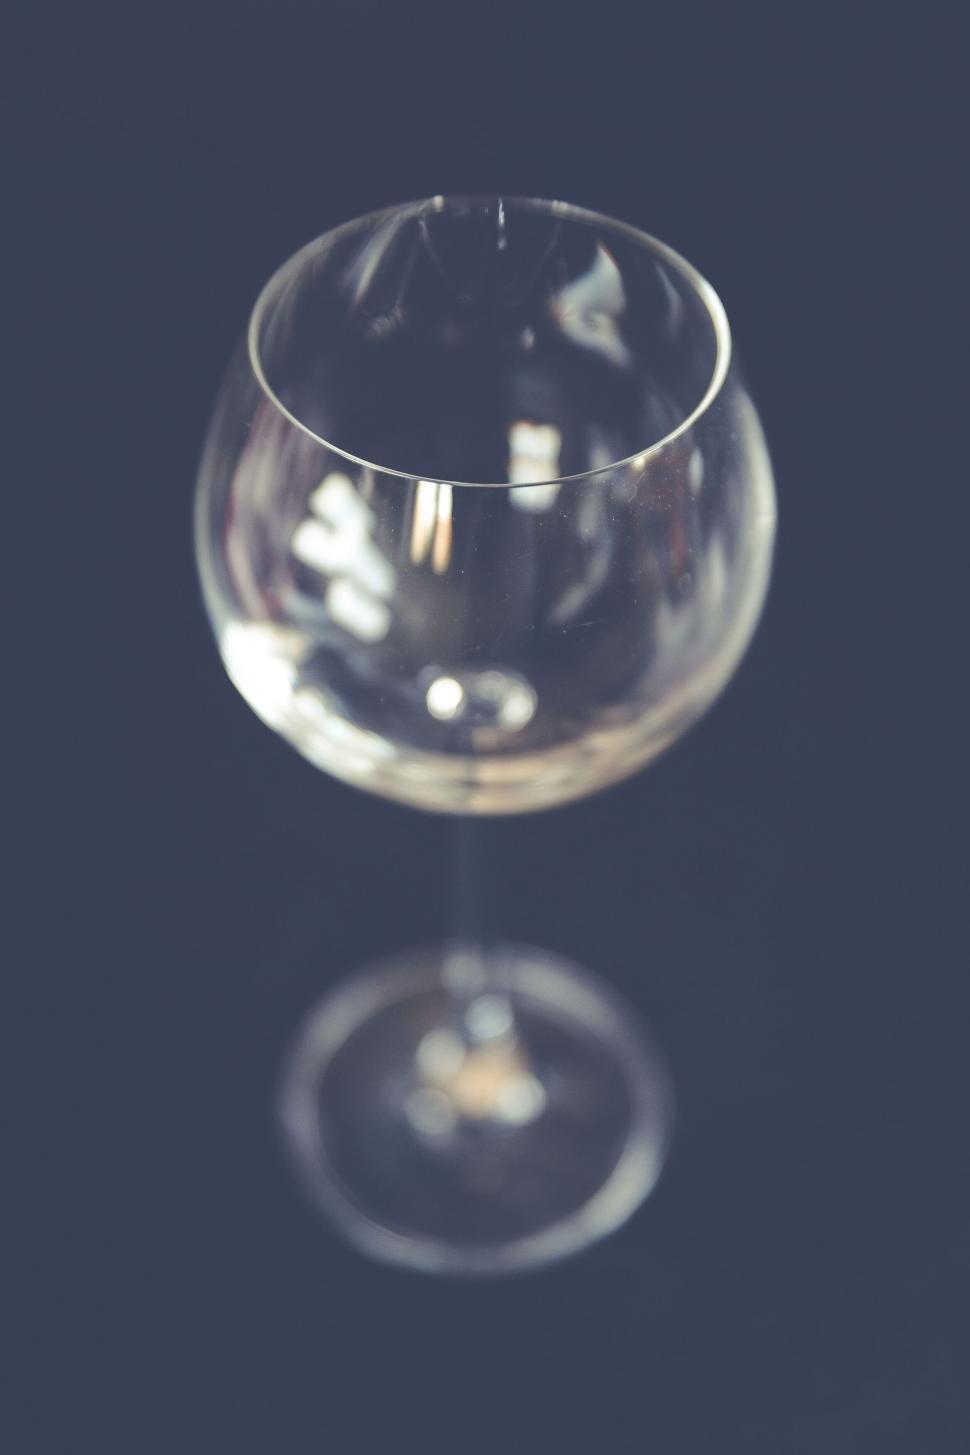 Free Image of Elegant empty wine glass on a dark background 